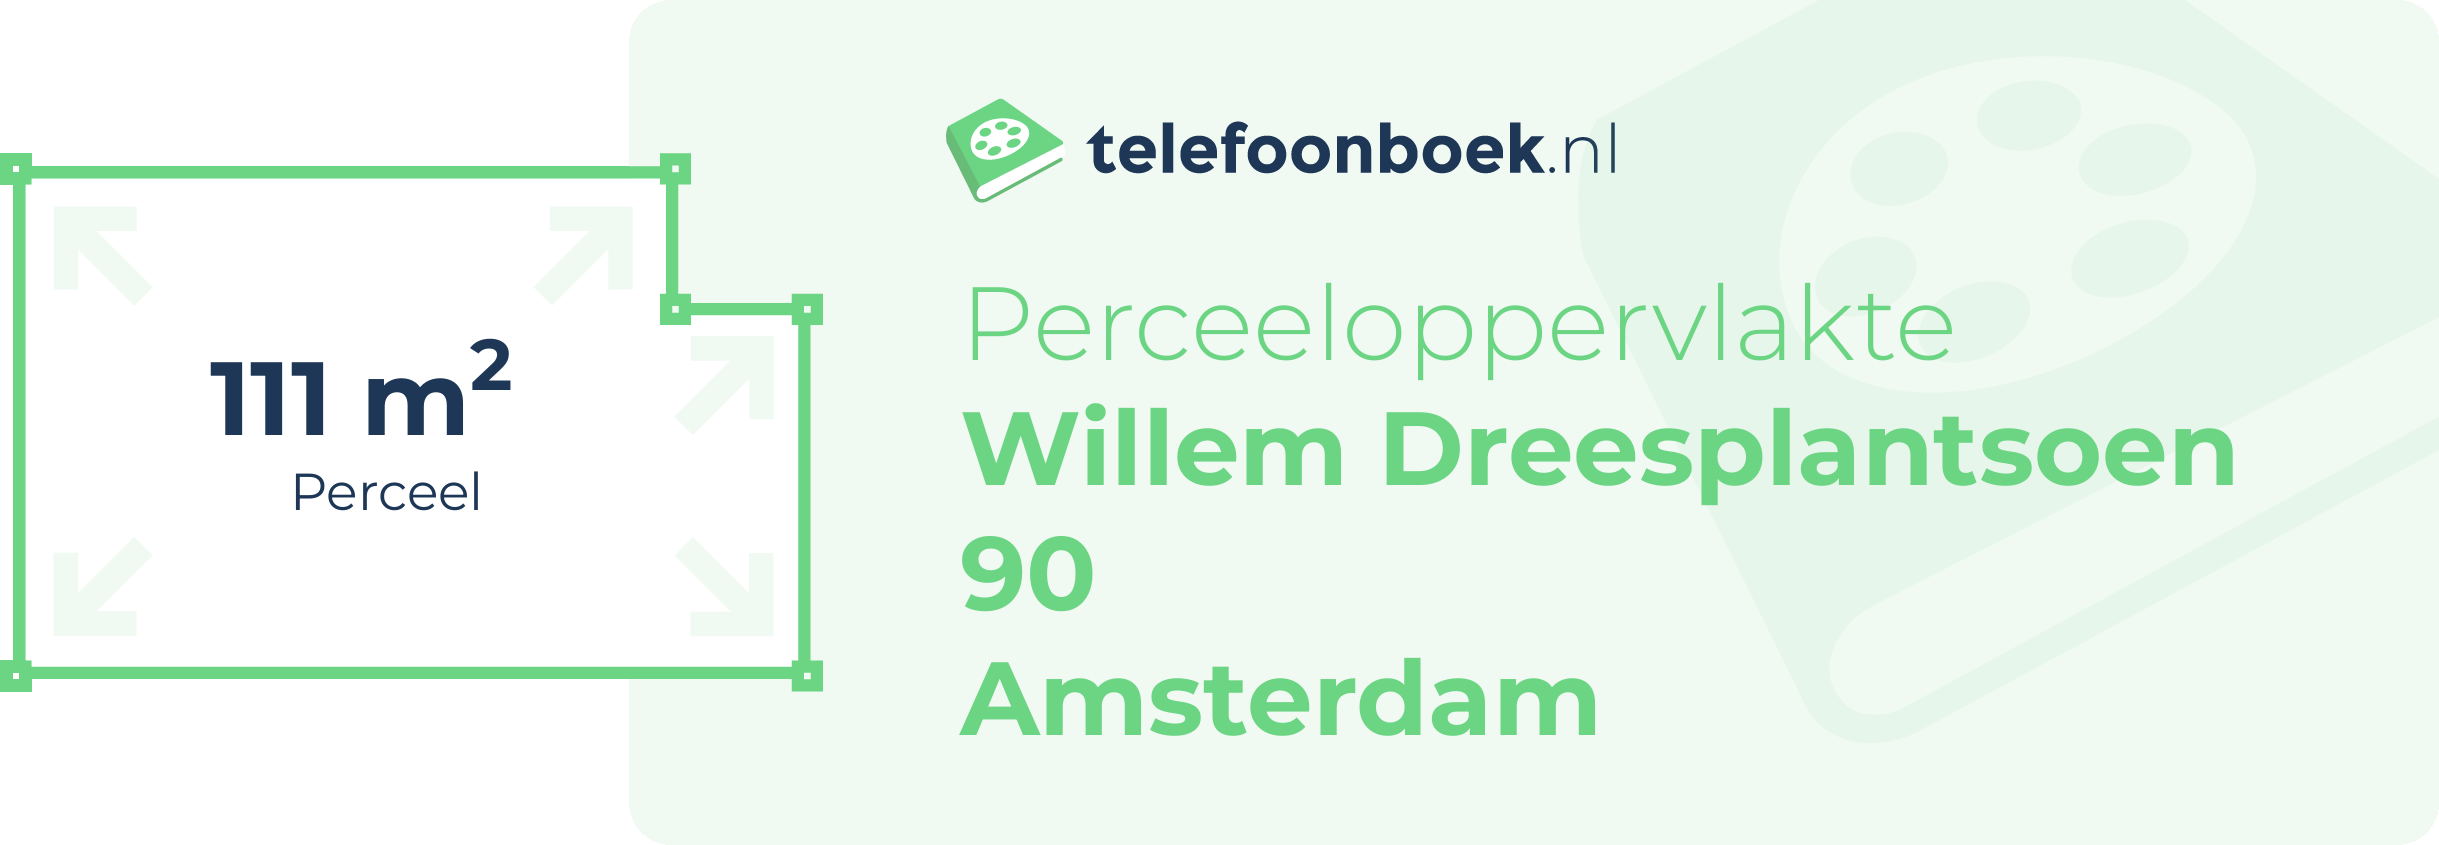 Perceeloppervlakte Willem Dreesplantsoen 90 Amsterdam